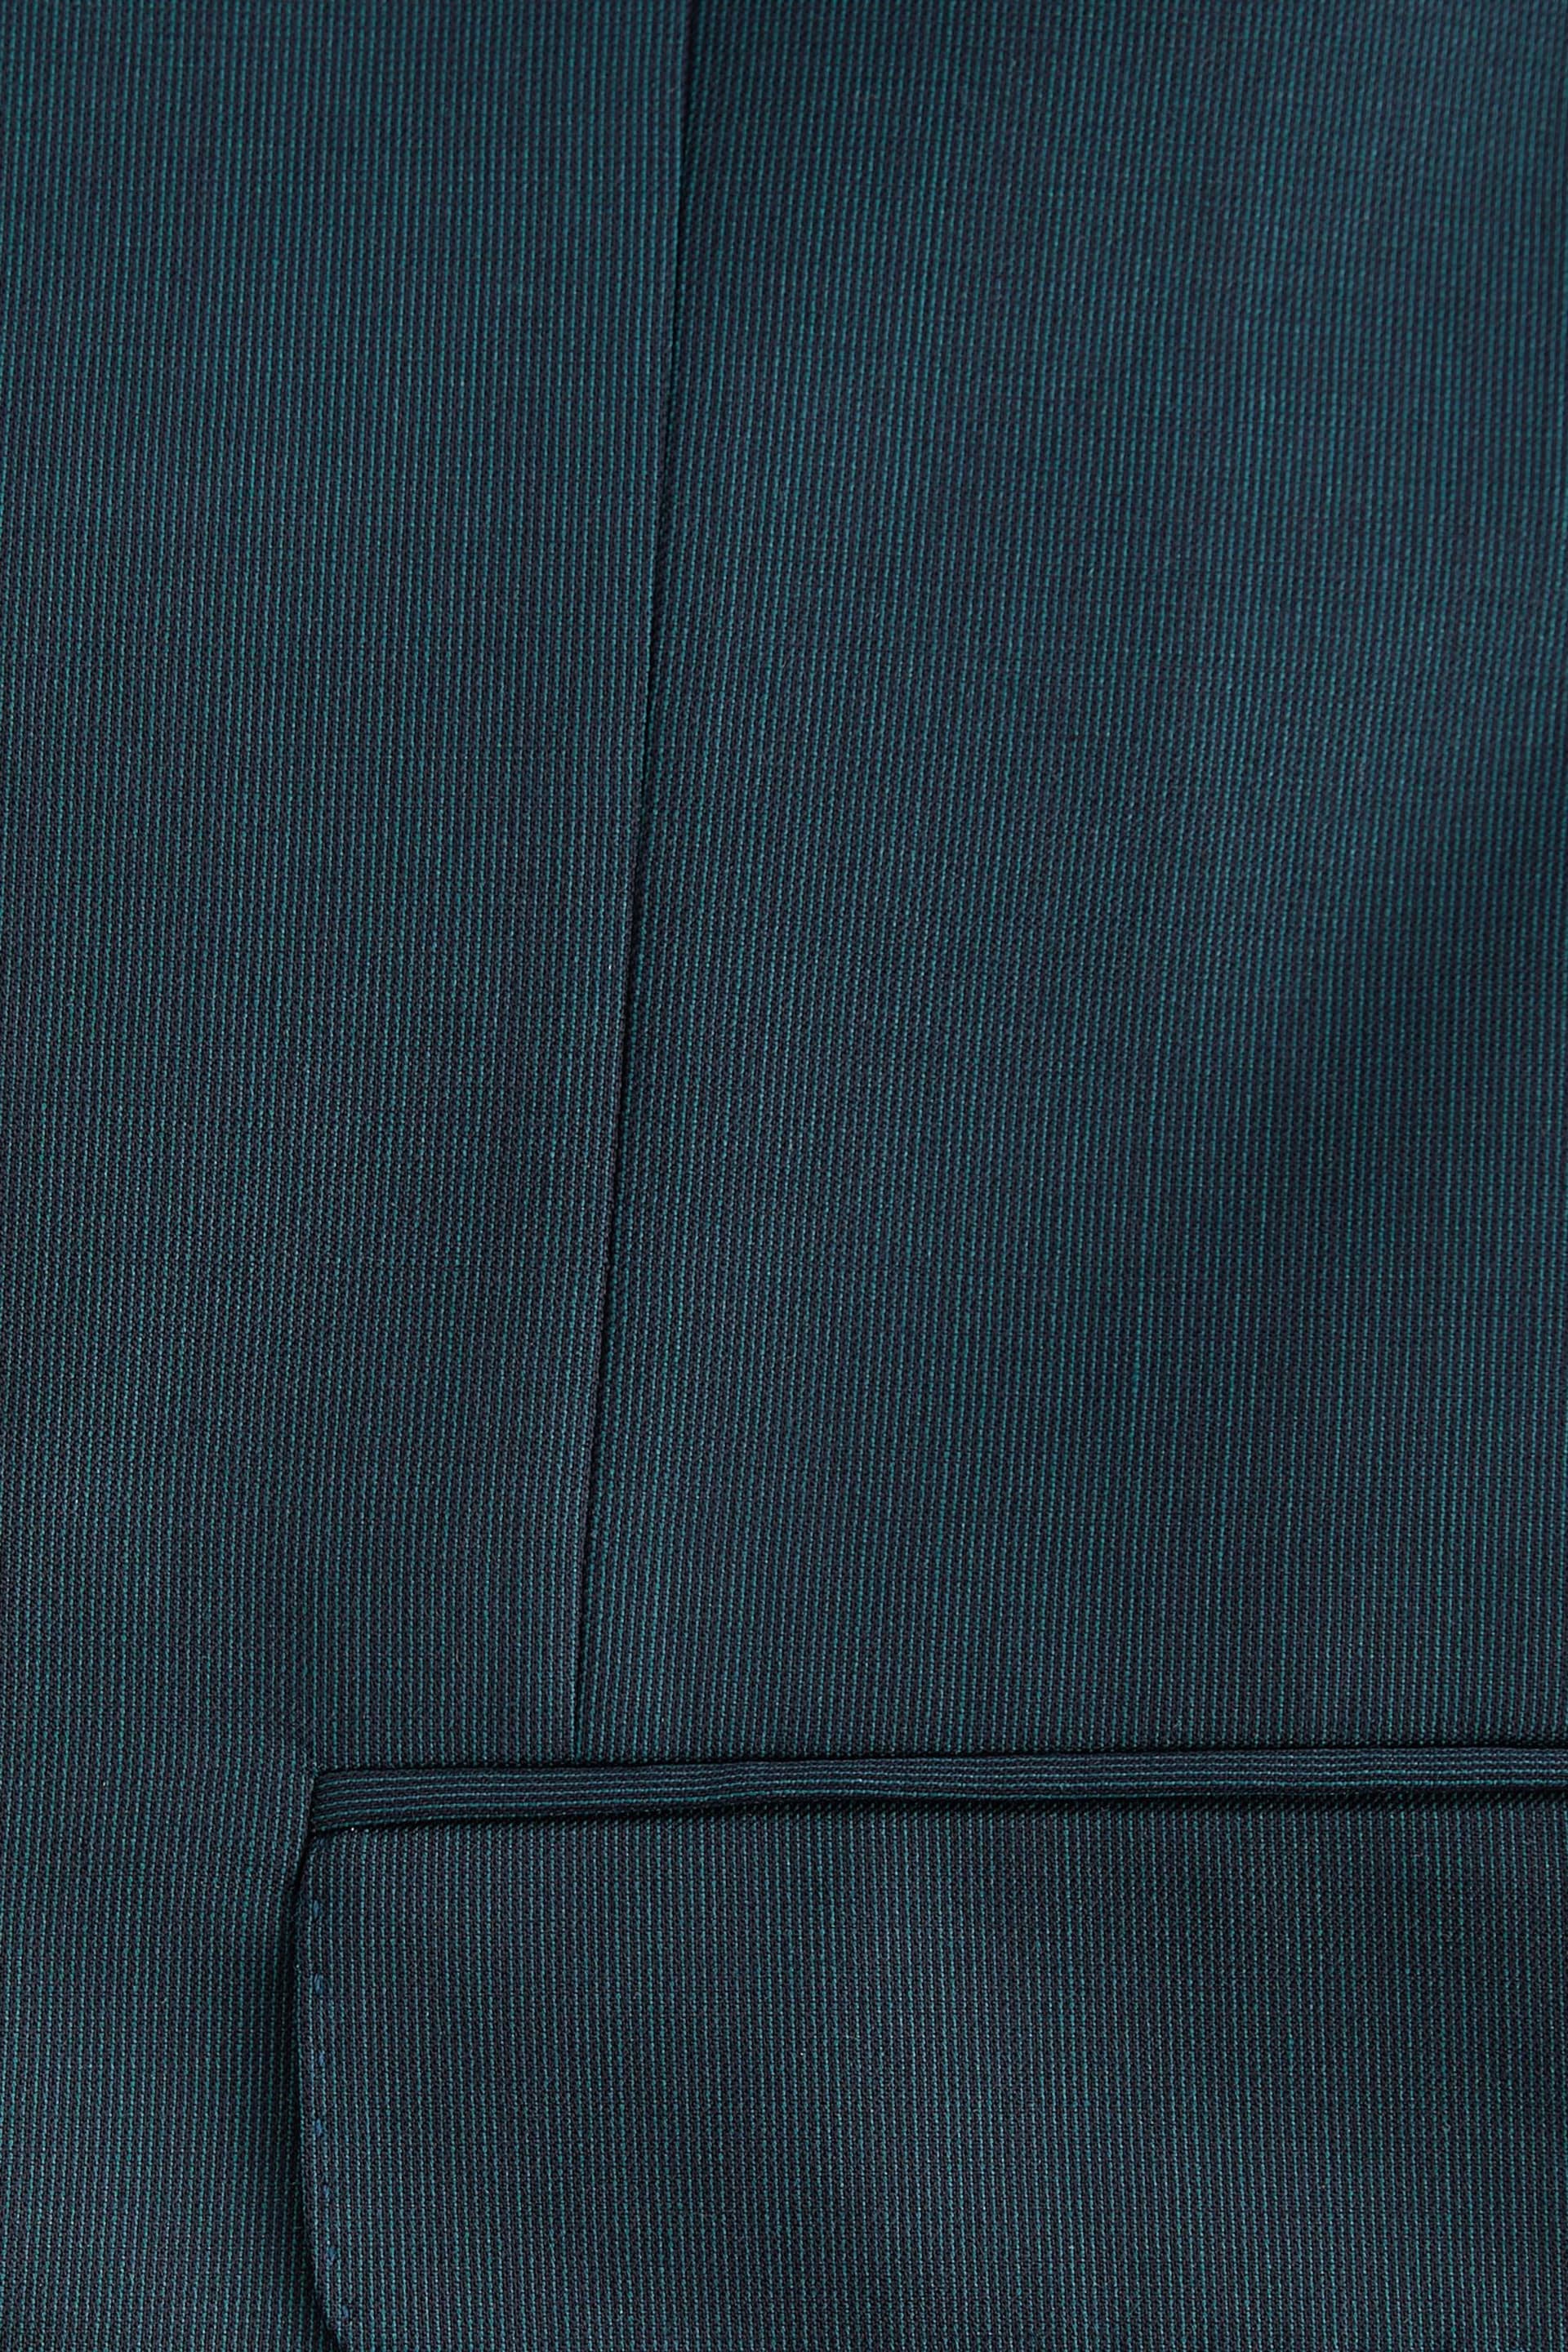 Teal Blue Slim Fit Wool Blend Suit Jacket - Image 7 of 8